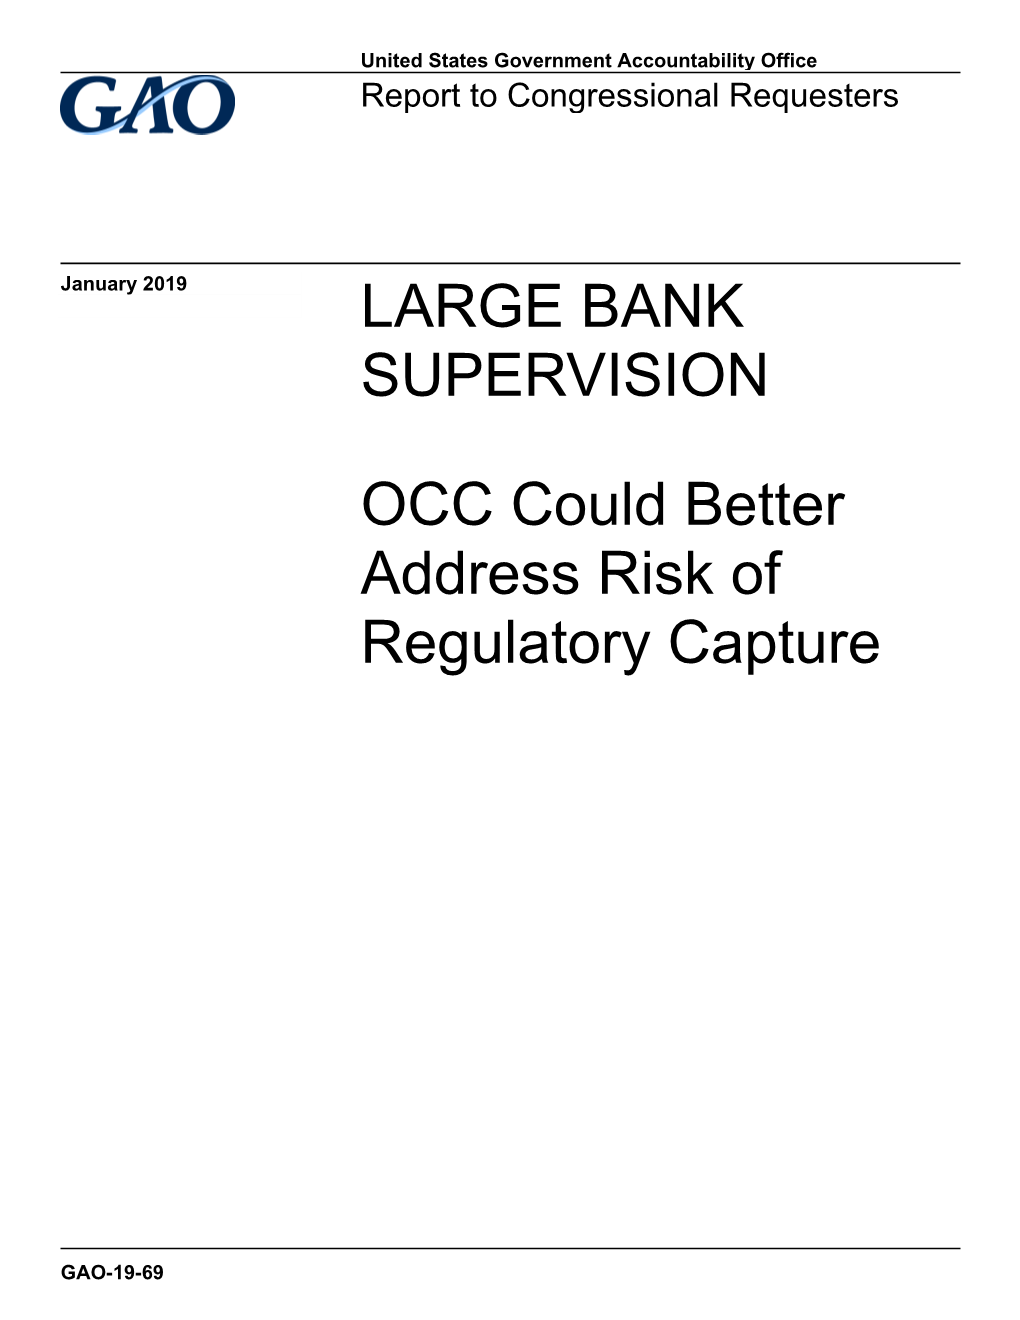 OCC Could Better Address Risk of Regulatory Capture